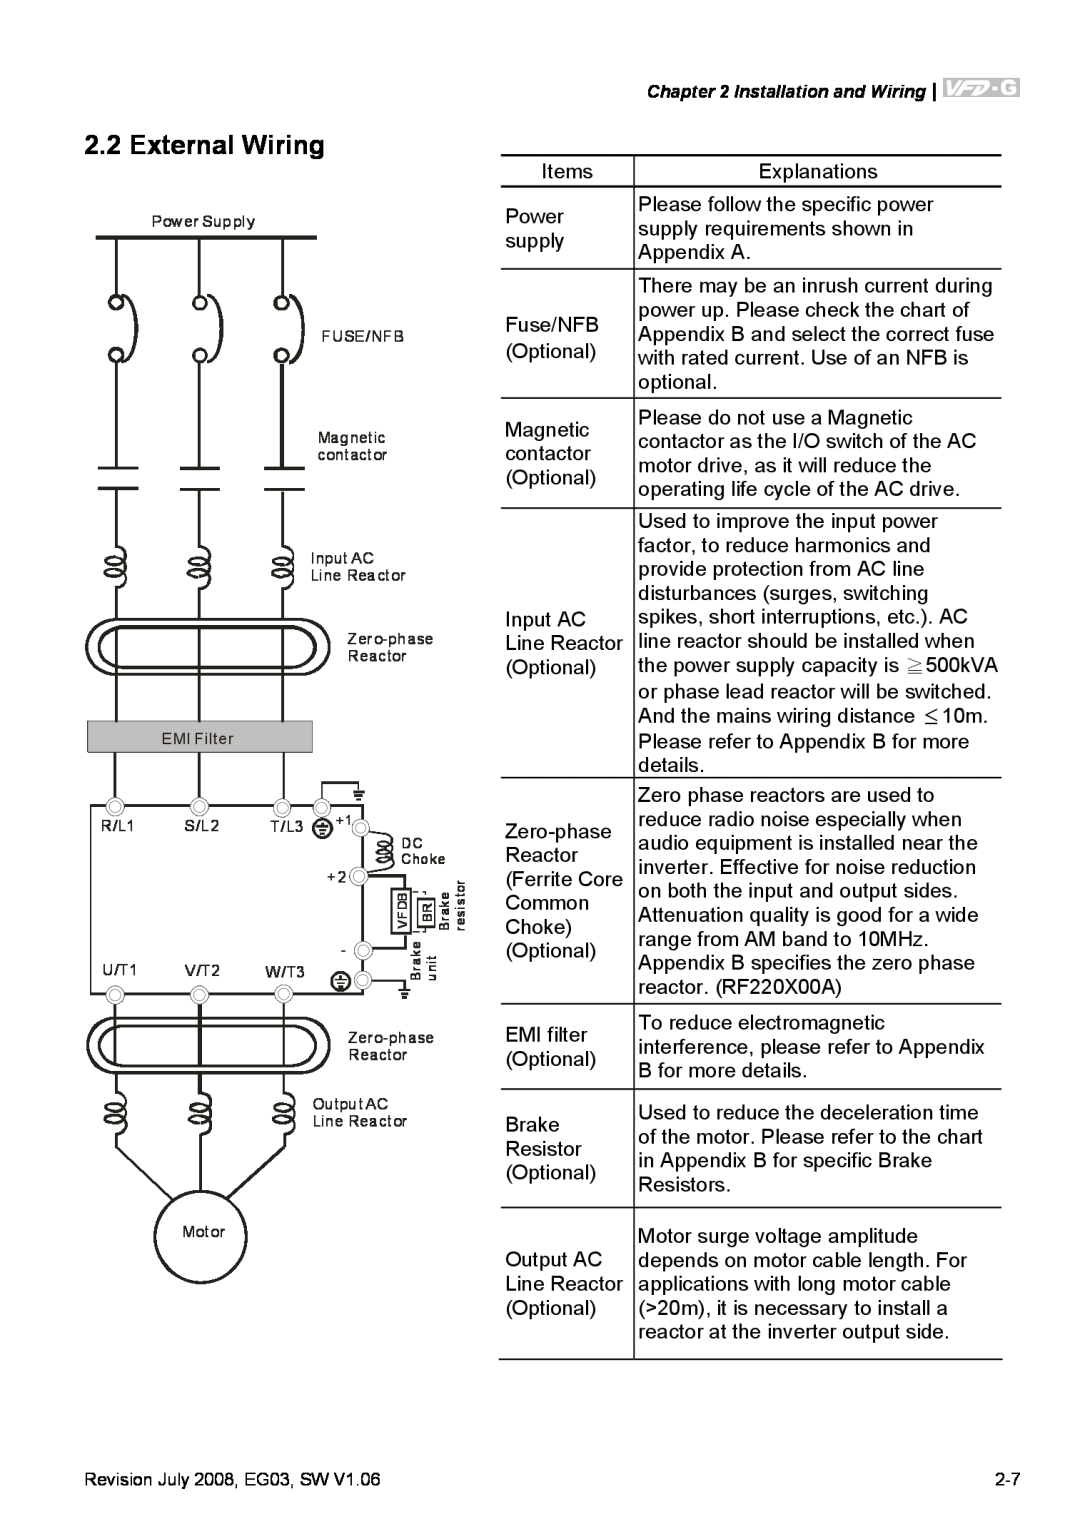 Delta Electronics VFD-G manual External Wiring, Choke, BR Brake resistor, Vf Db, Brake unit 